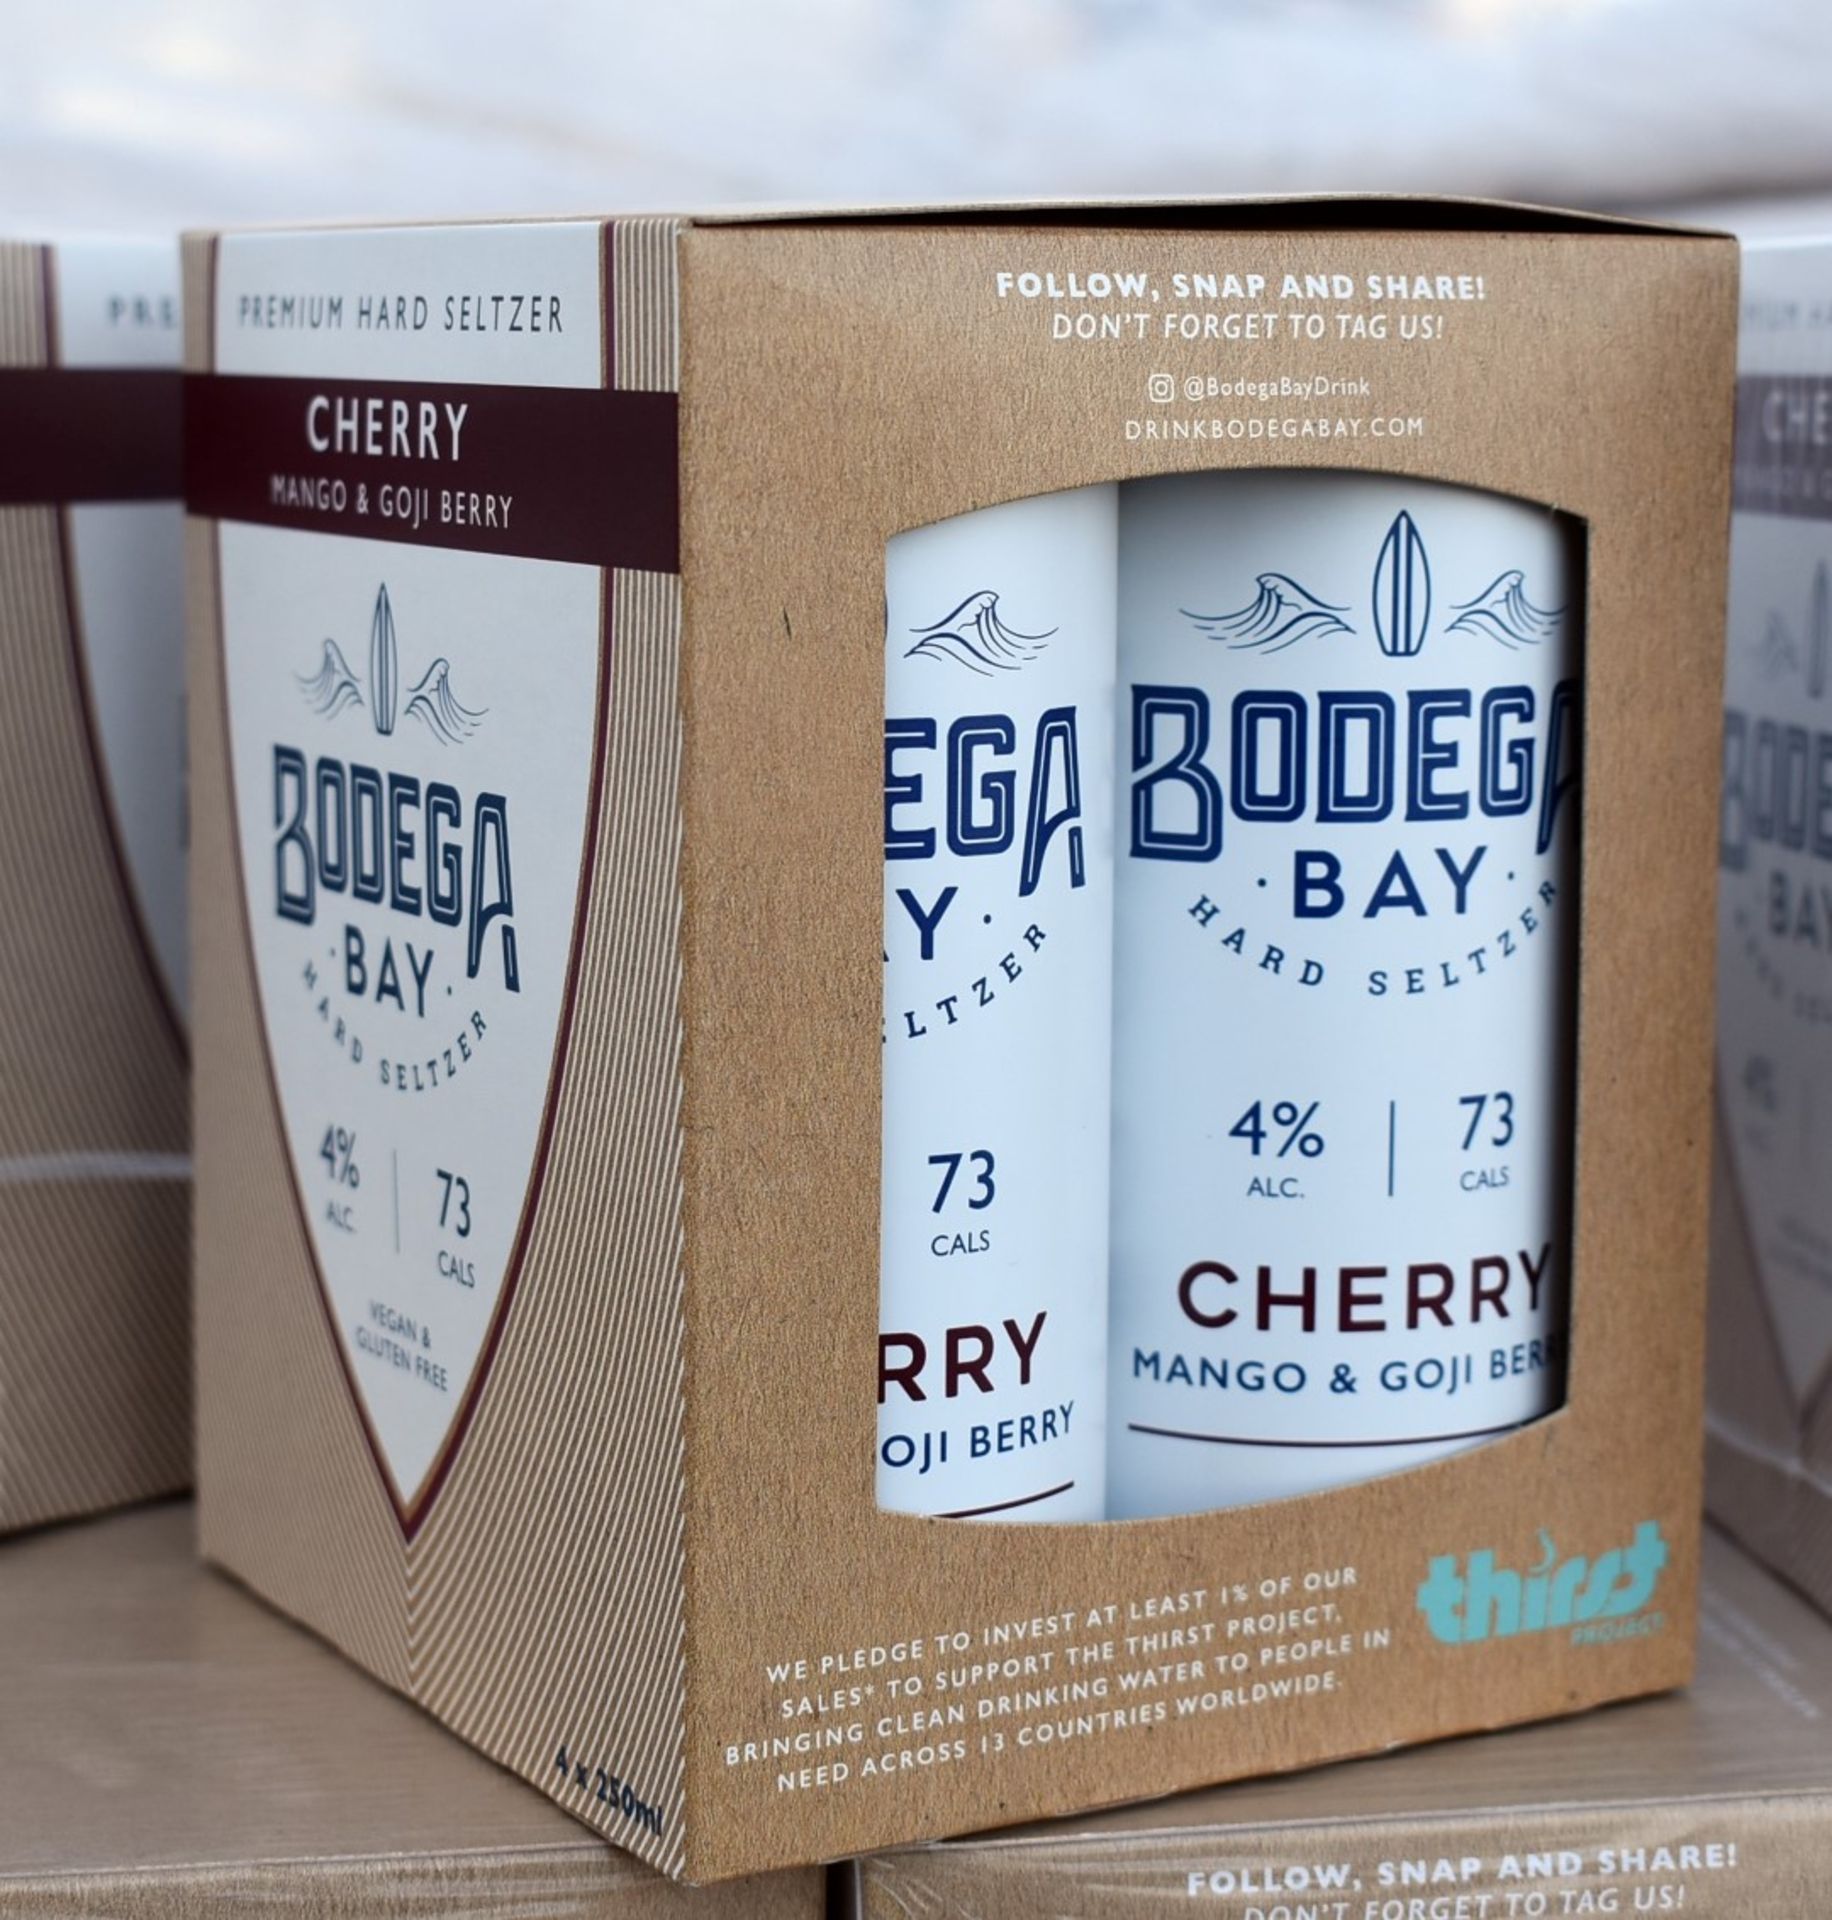 24 x Bodega Bay Hard Seltzer 250ml Alcoholic Sparkling Water Drinks - Cherry Mango & Goji Berry - 4% - Image 2 of 8